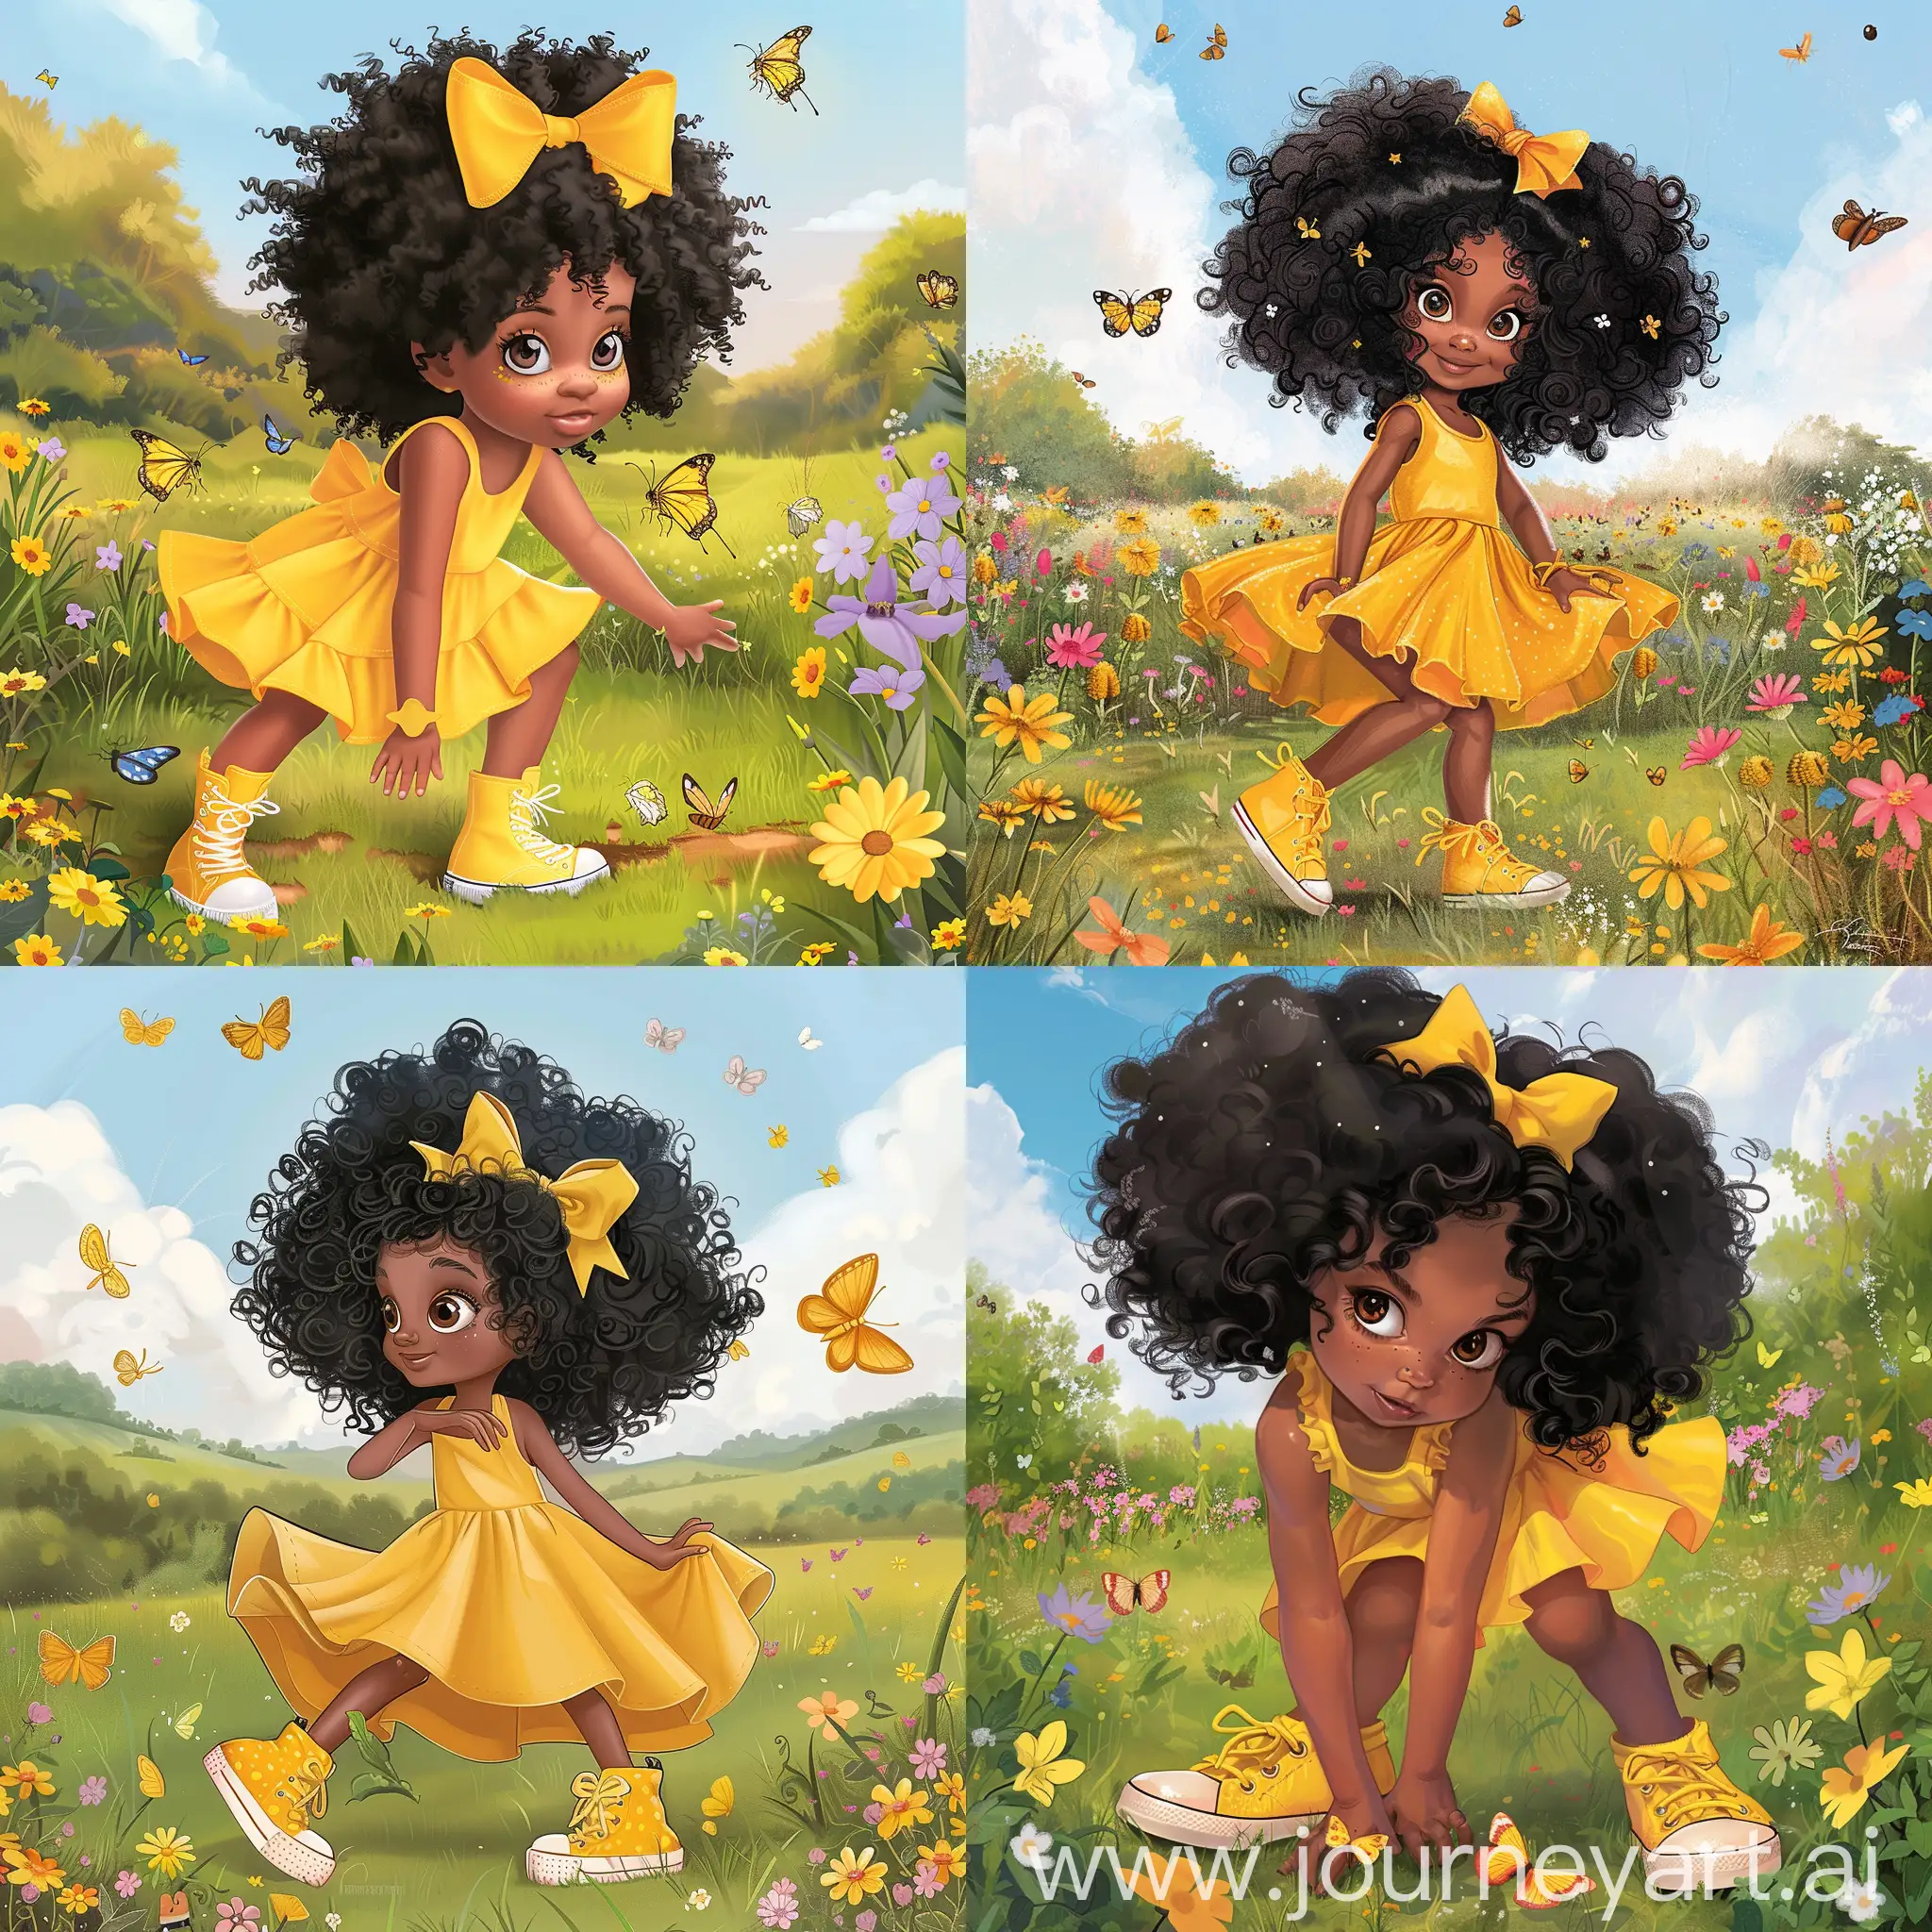 Joyful-7YearOld-Girl-Amidst-Butterflies-and-Blooms